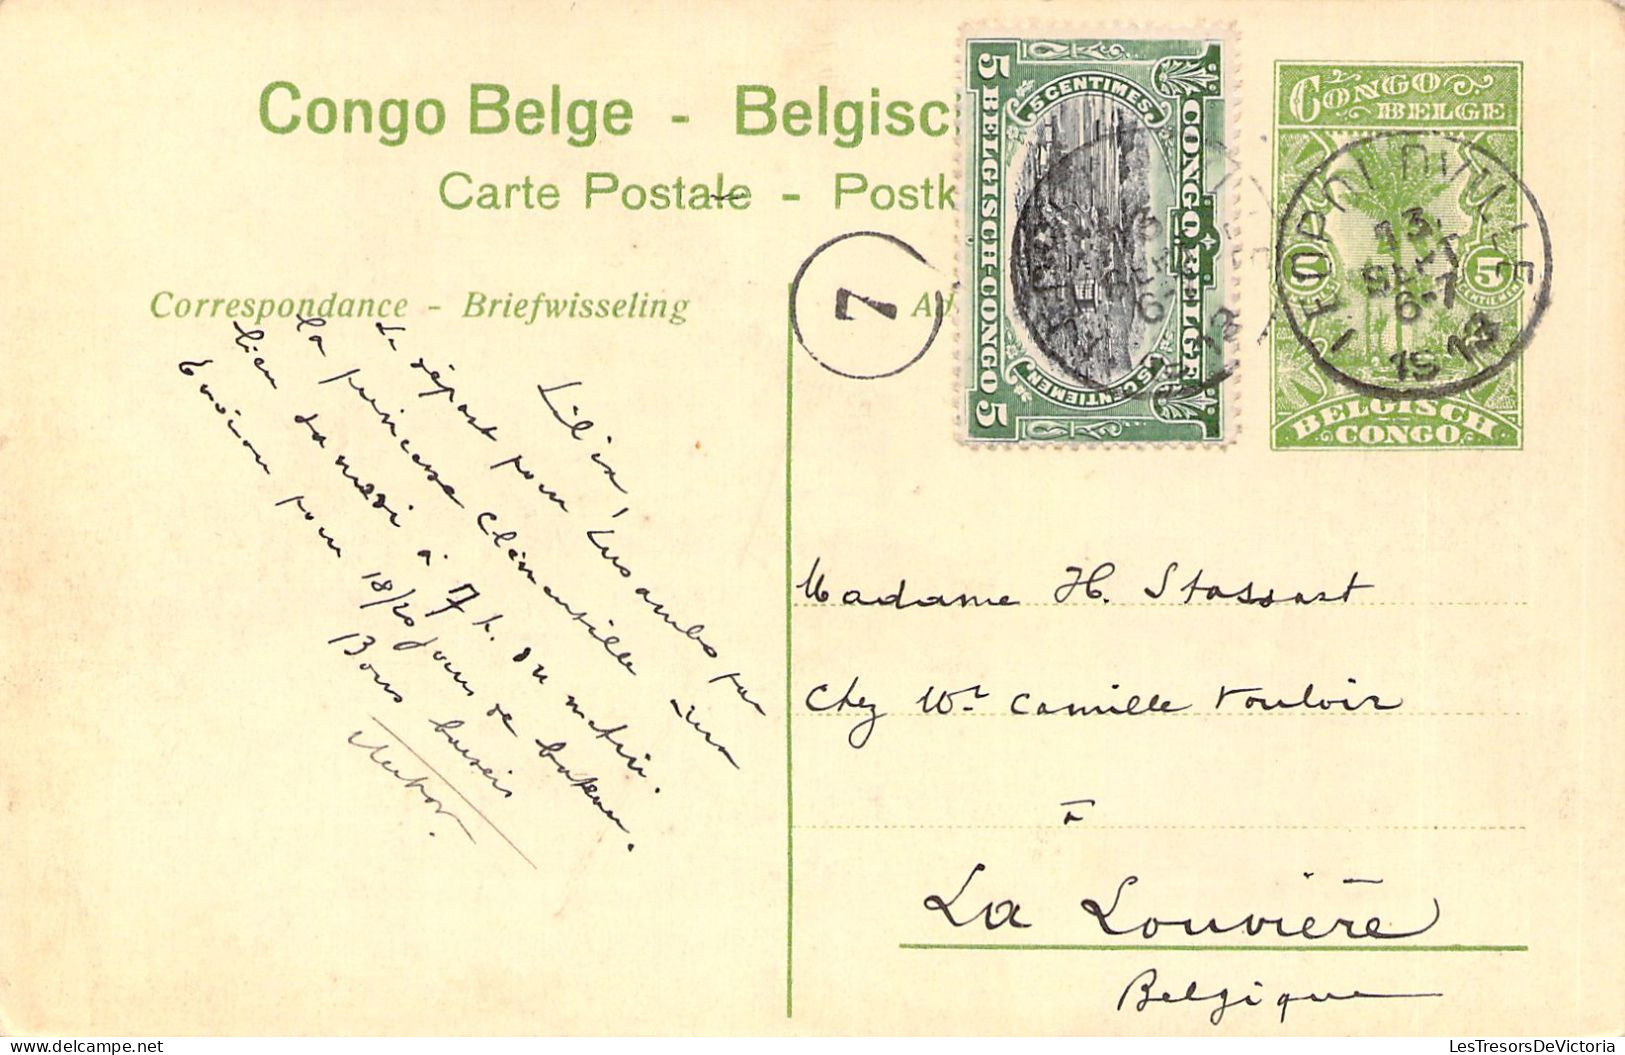 CONGO - Emballage Du Poisson Sec Dans La Mayumbe - Carte Postale Ancienne - Andere & Zonder Classificatie